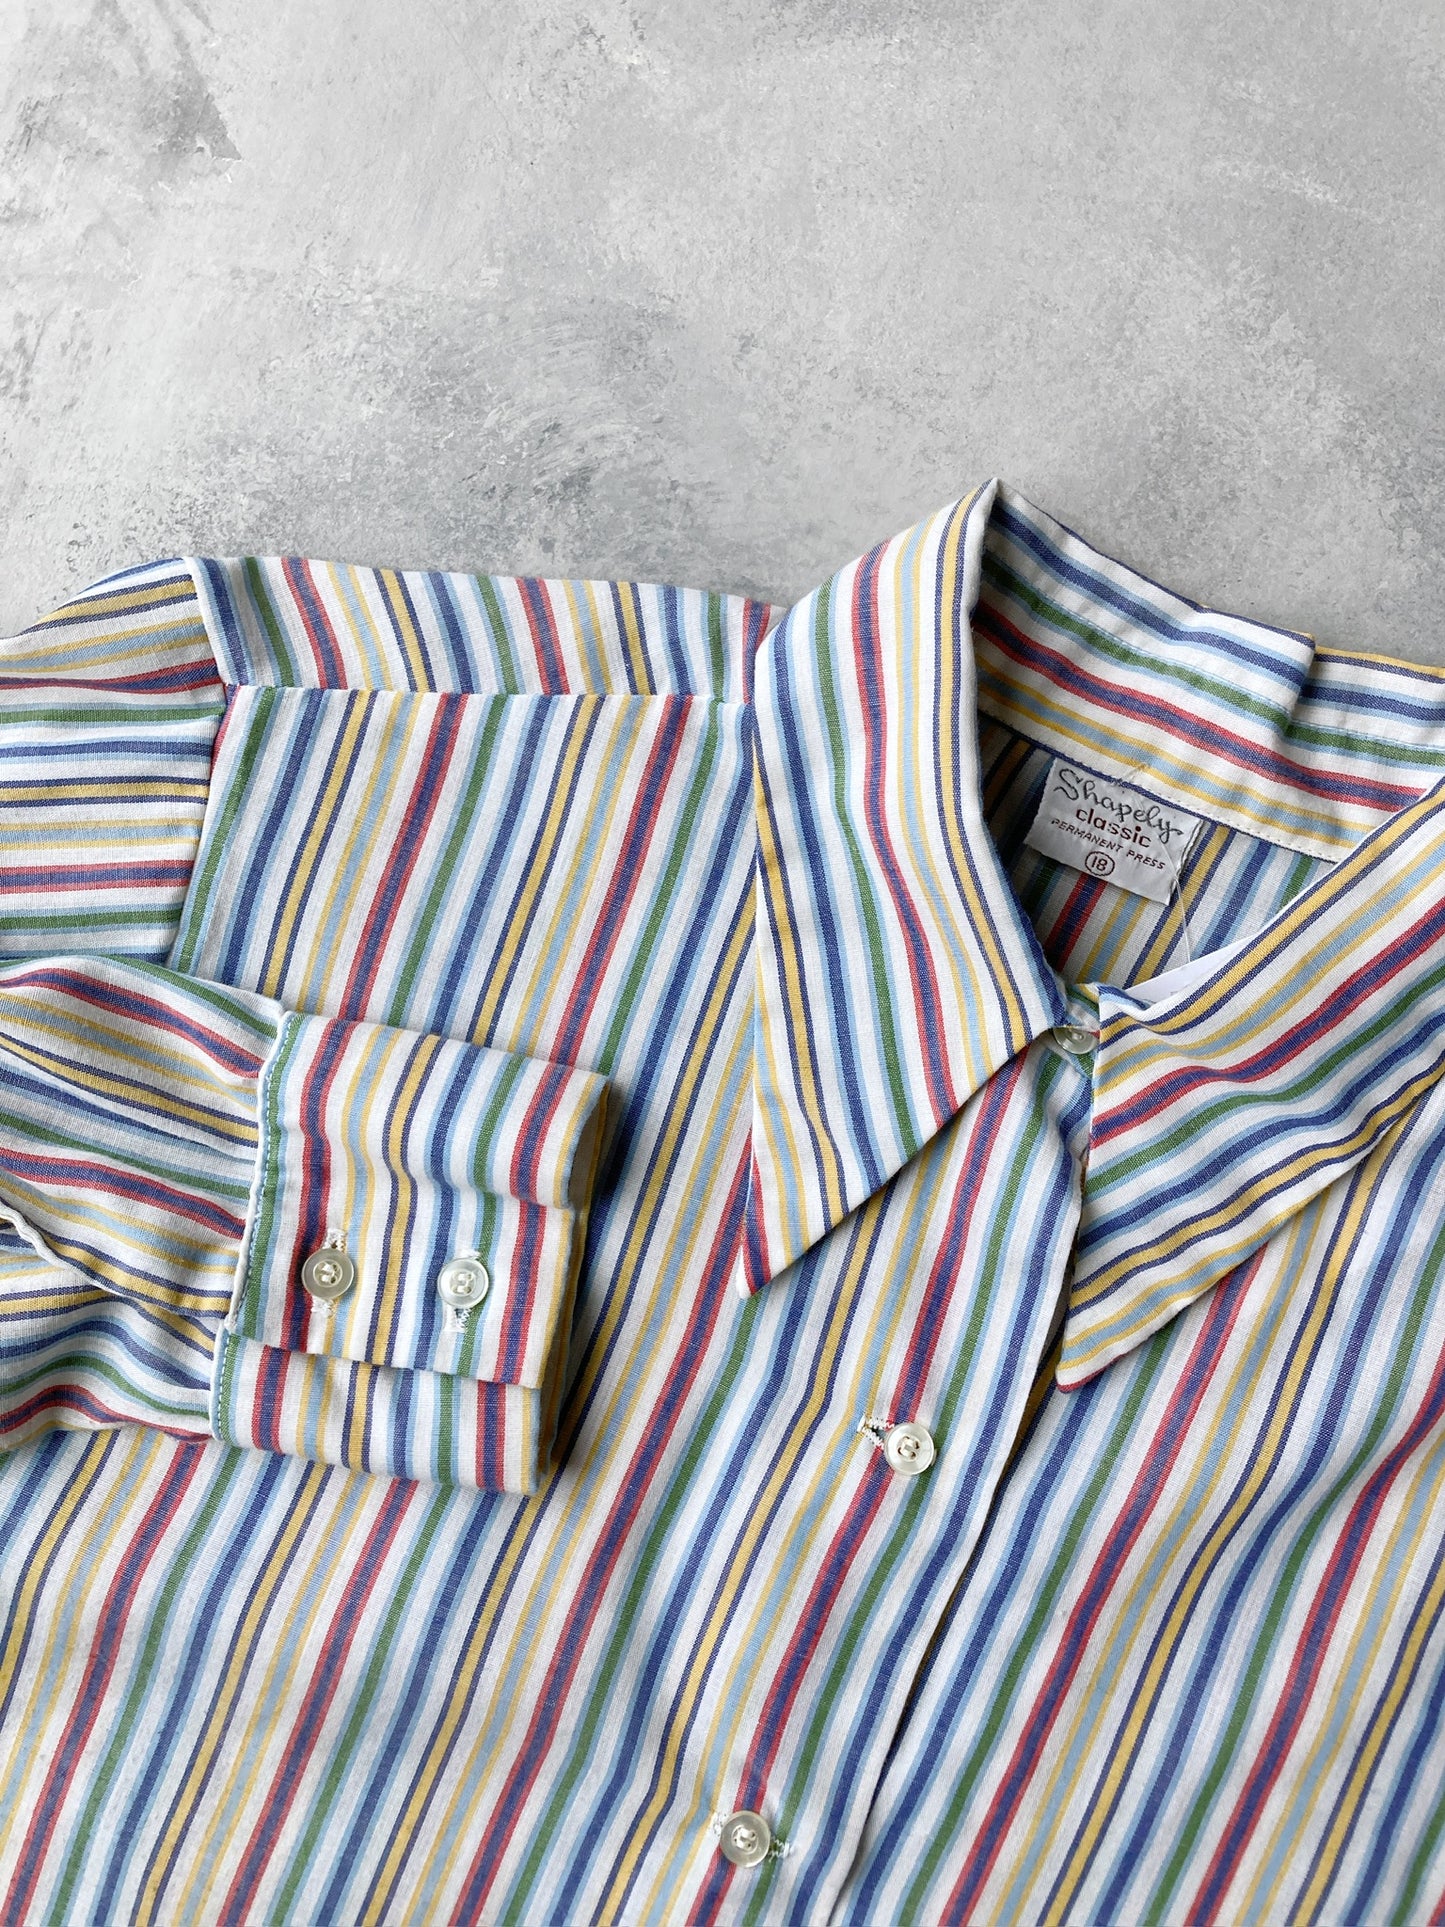 Colorful Striped Shirt 70's - Medium / Large